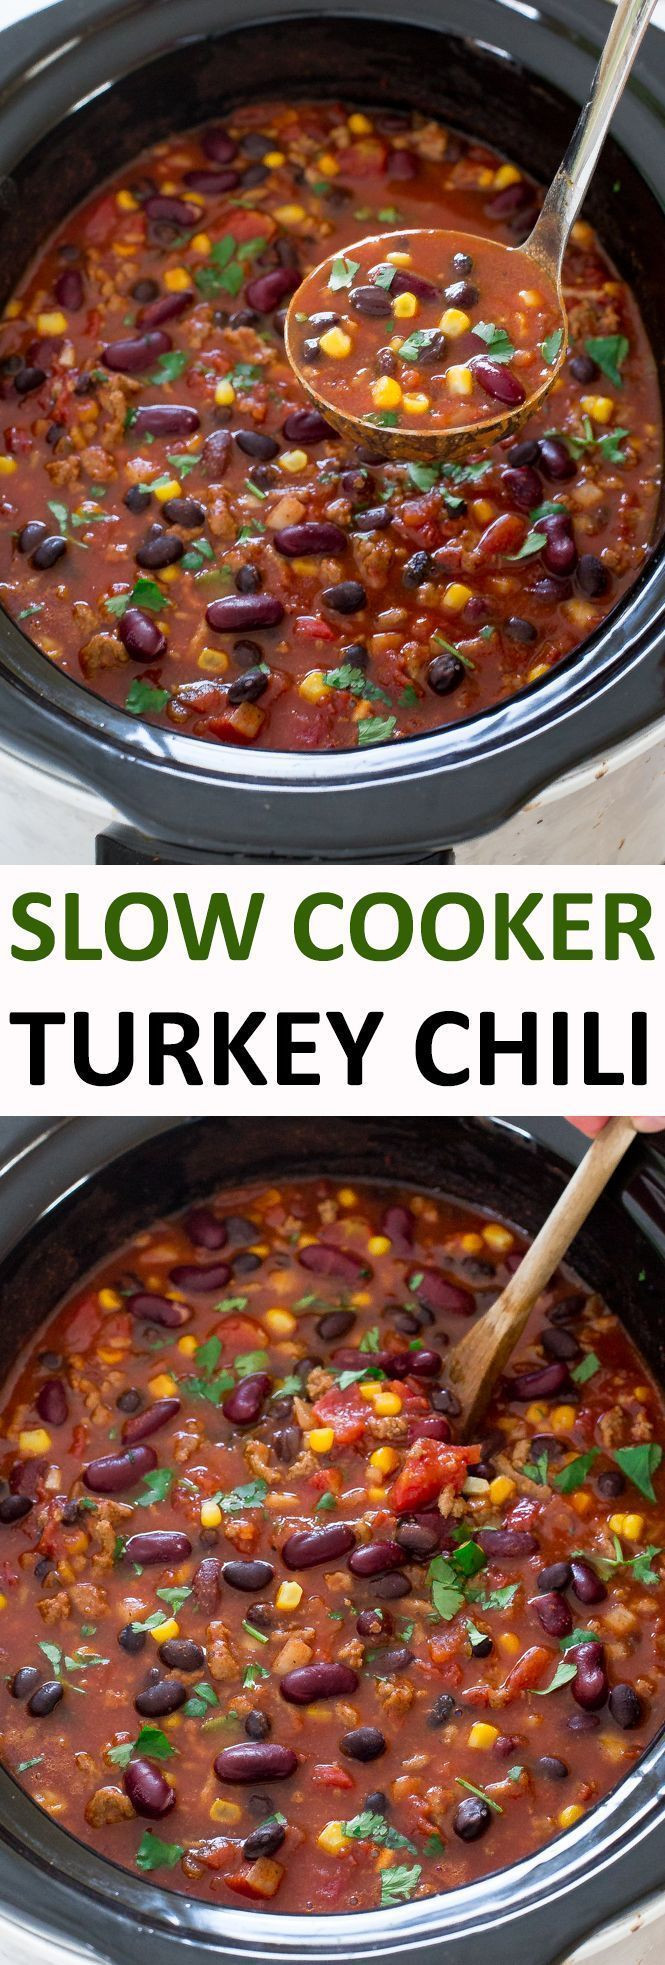 Turkey Chili Slow Cooker Recipe
 Best 25 Turkey chili slow cooker ideas on Pinterest